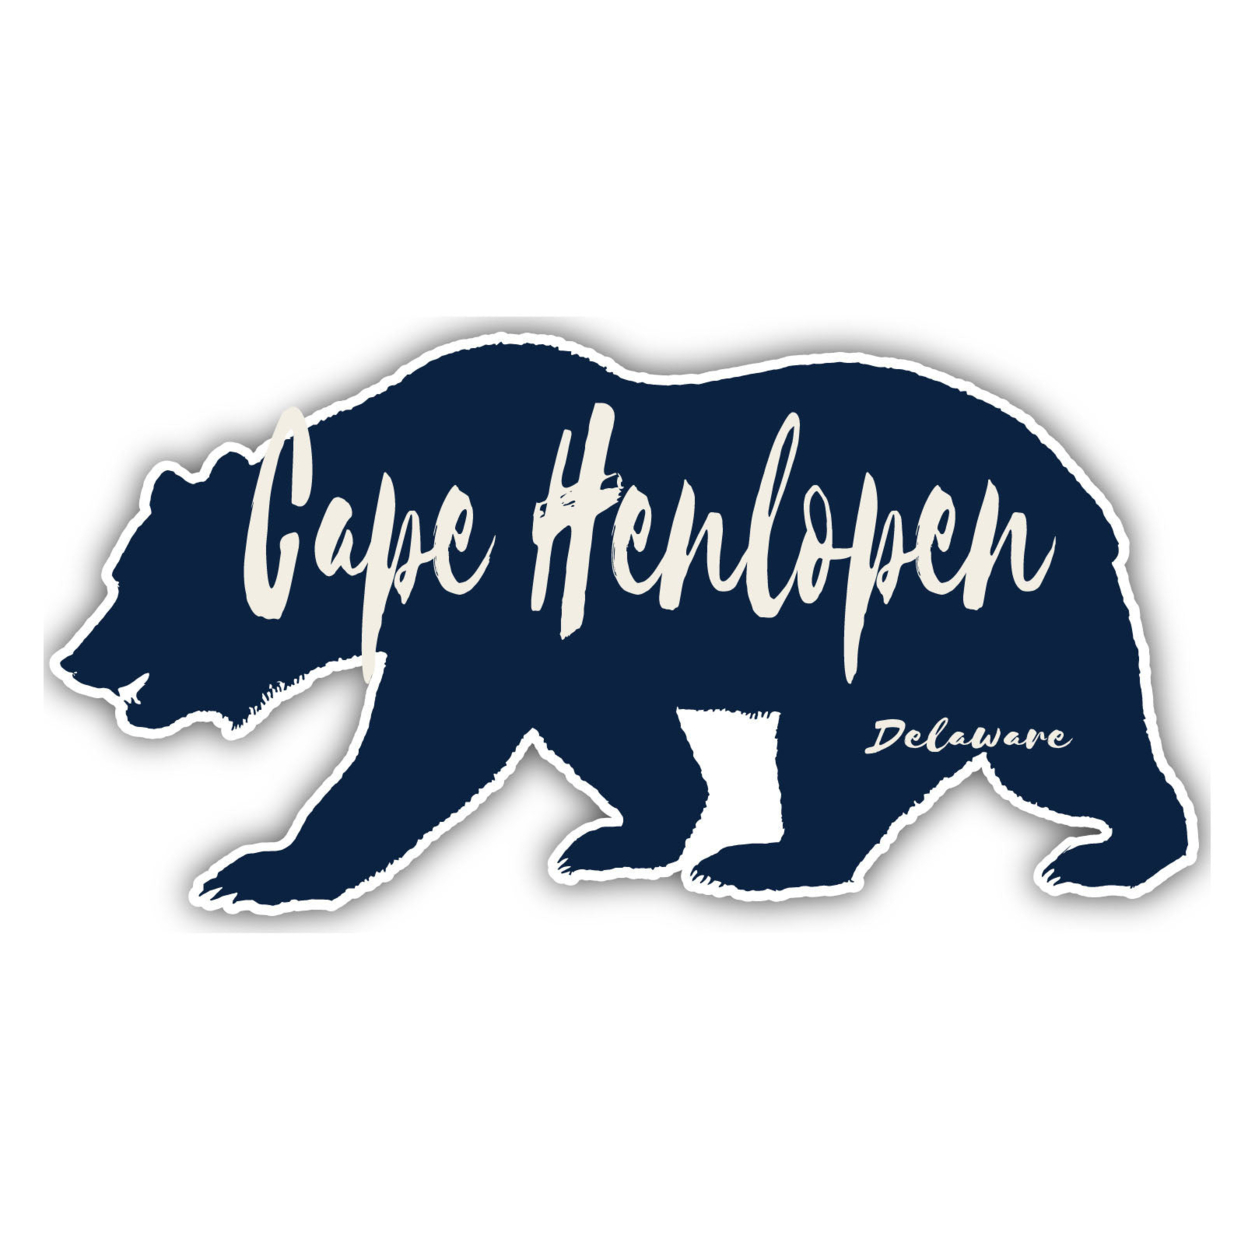 Cape Henlopen Delaware Souvenir Decorative Stickers (Choose Theme And Size) - Single Unit, 4-Inch, Camp Life